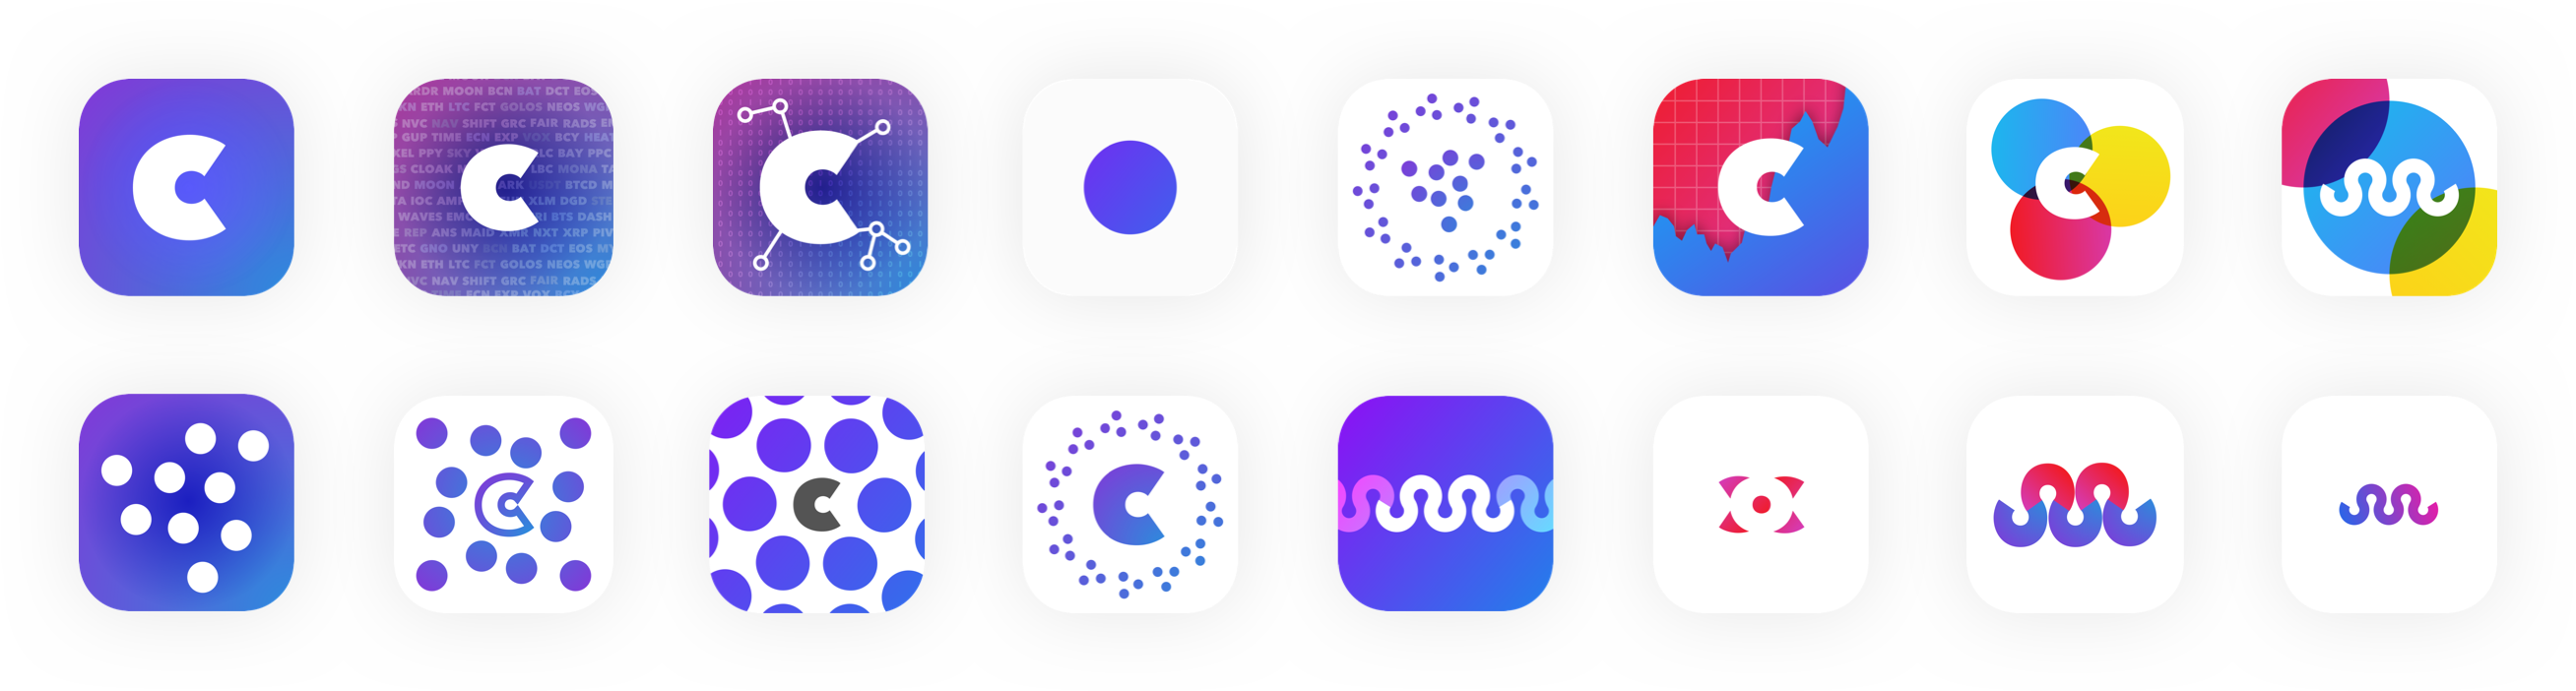 App icons cointinuum